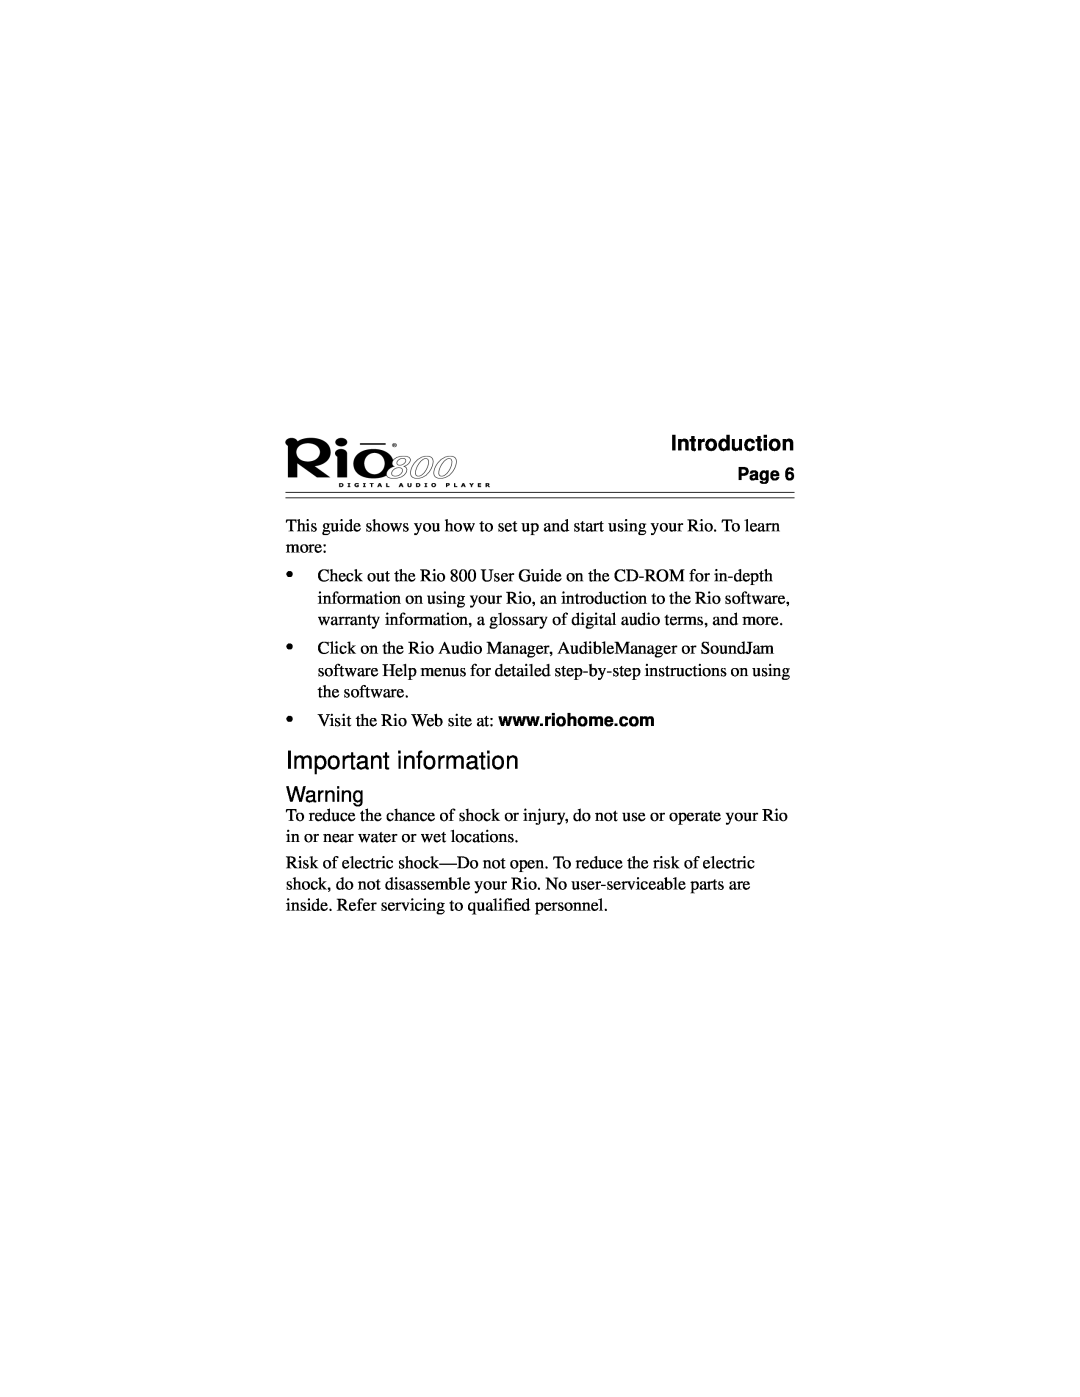 Rio Audio Rio 800 manual Important information, Introduction 